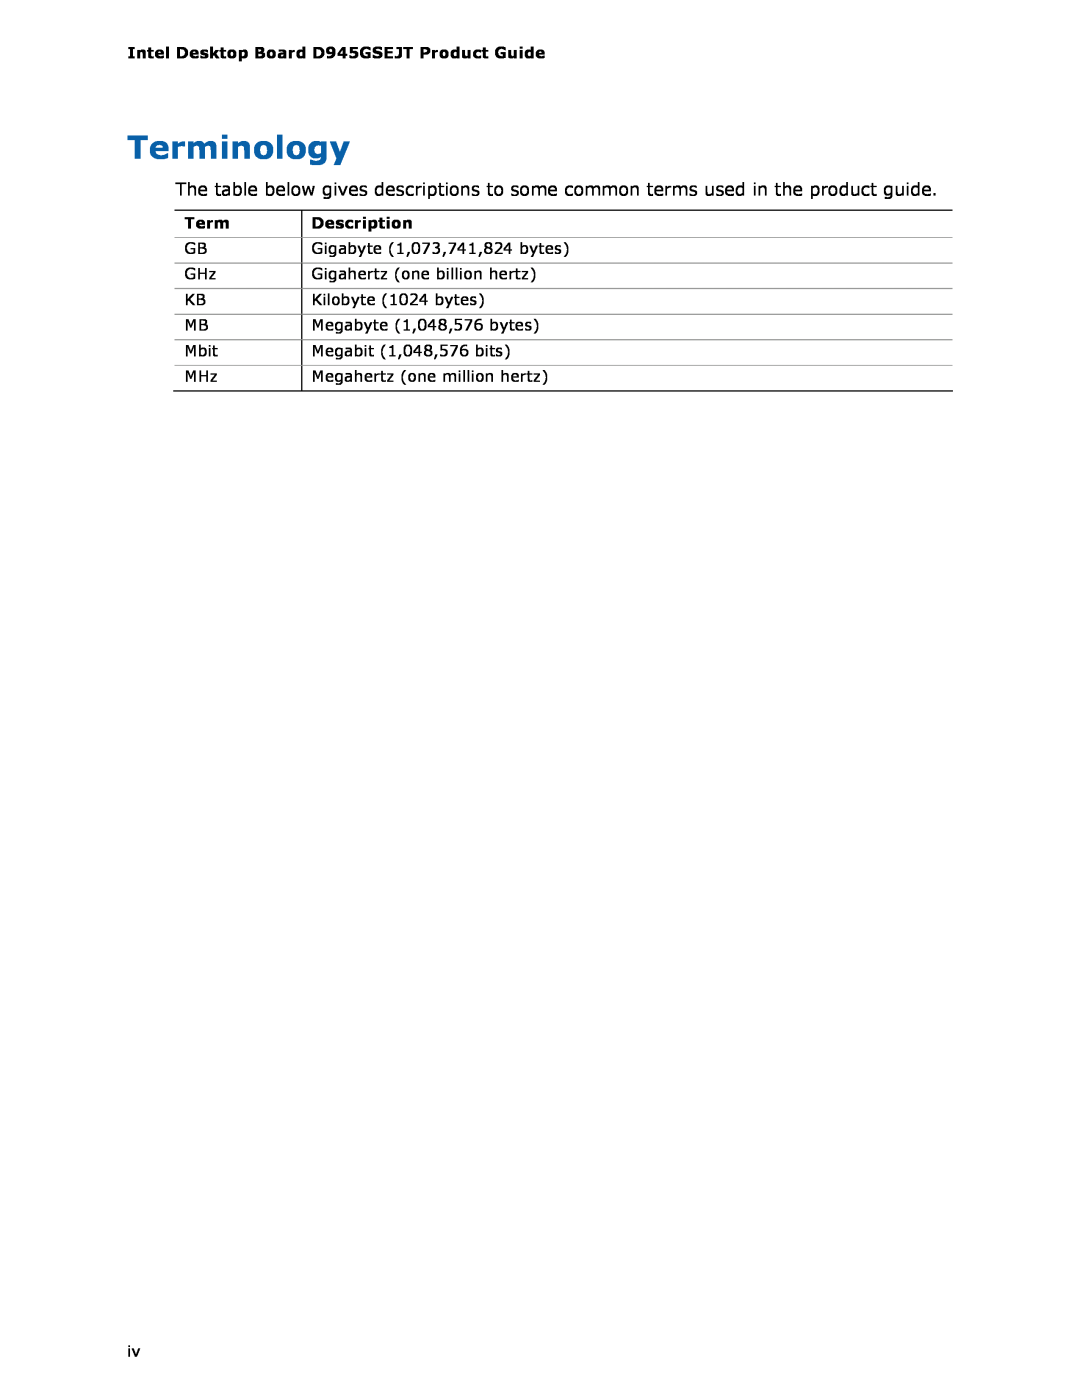 Intel manual Terminology, Intel Desktop Board D945GSEJT Product Guide, Description 